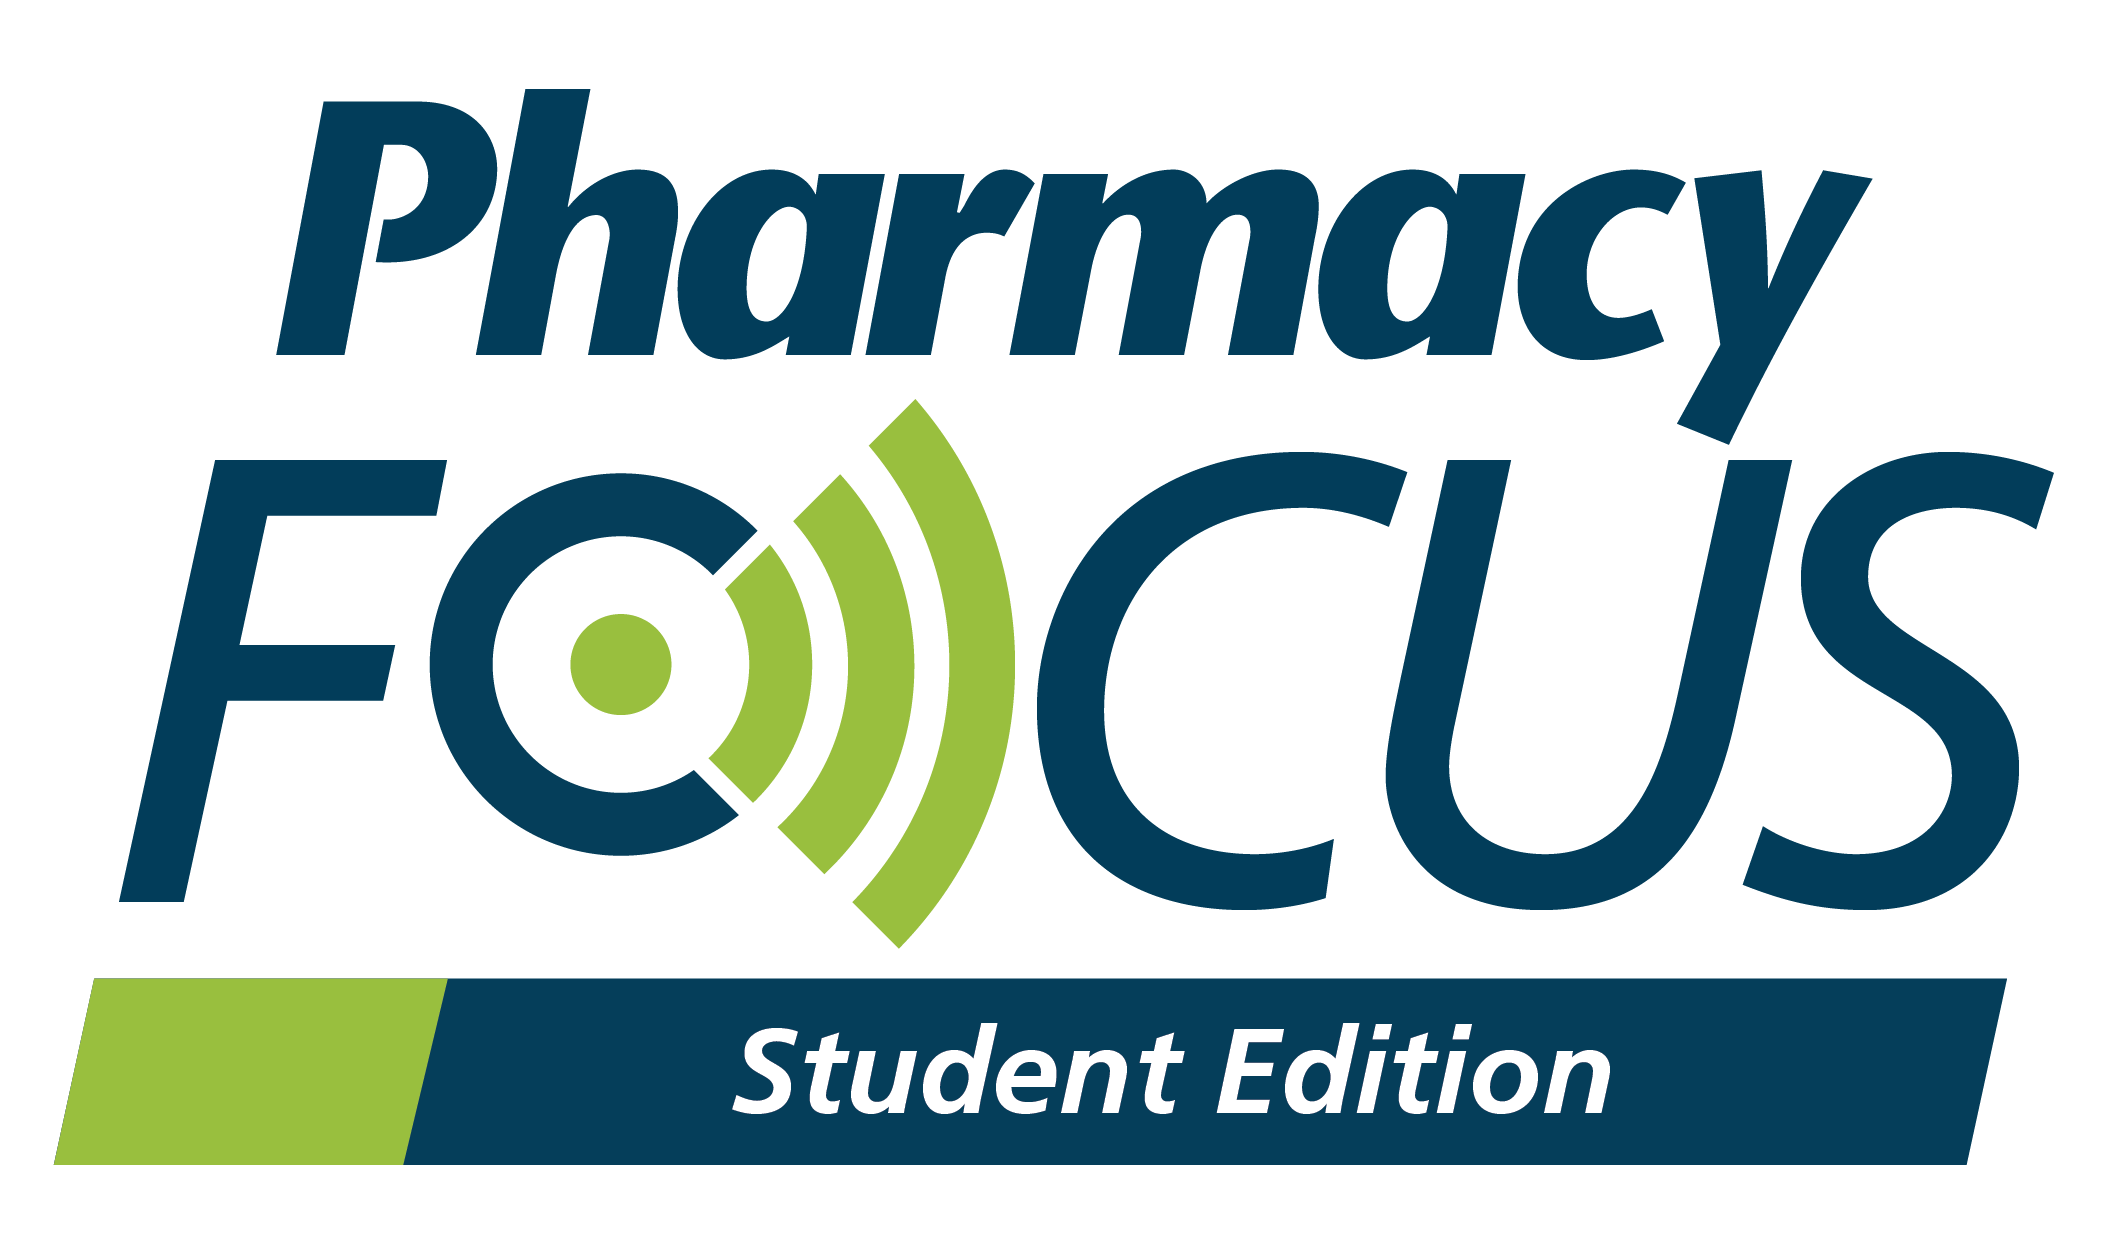 Pharmacy Focus: Student Edition - Episode 2